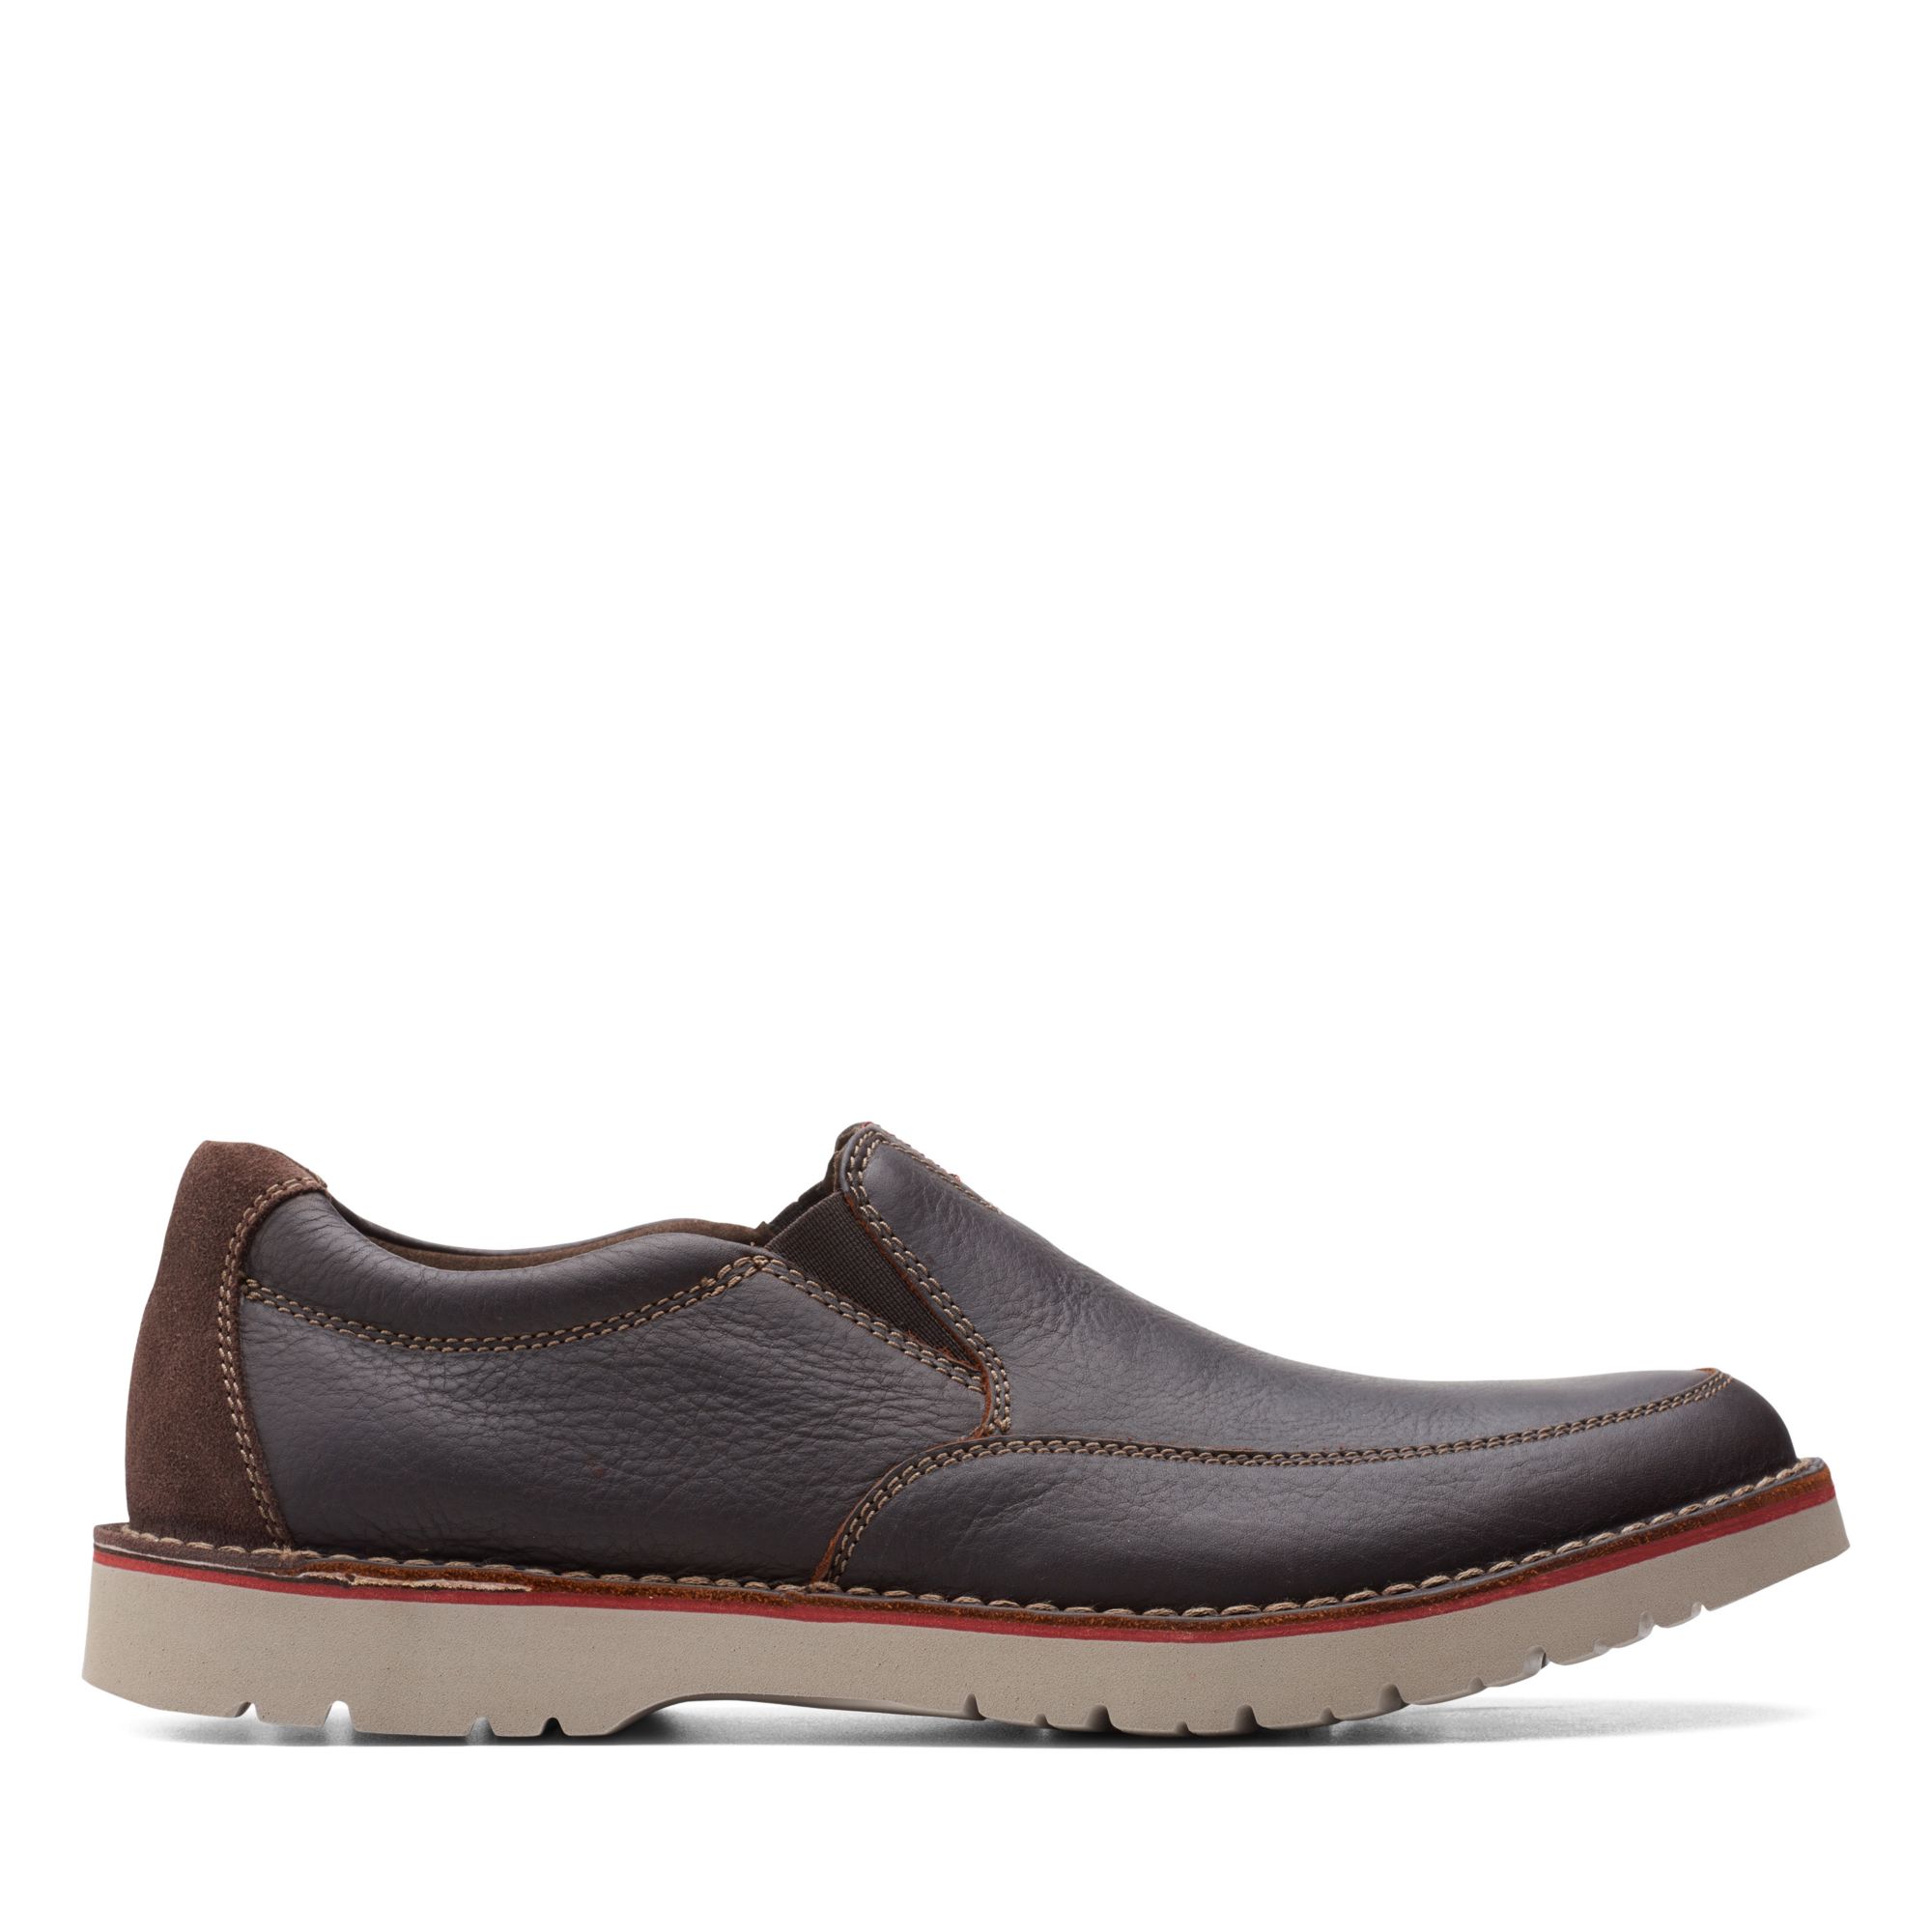 Clarks Mens Vargo Step Brown Leather Slip On Dress Casual Shoes | eBay